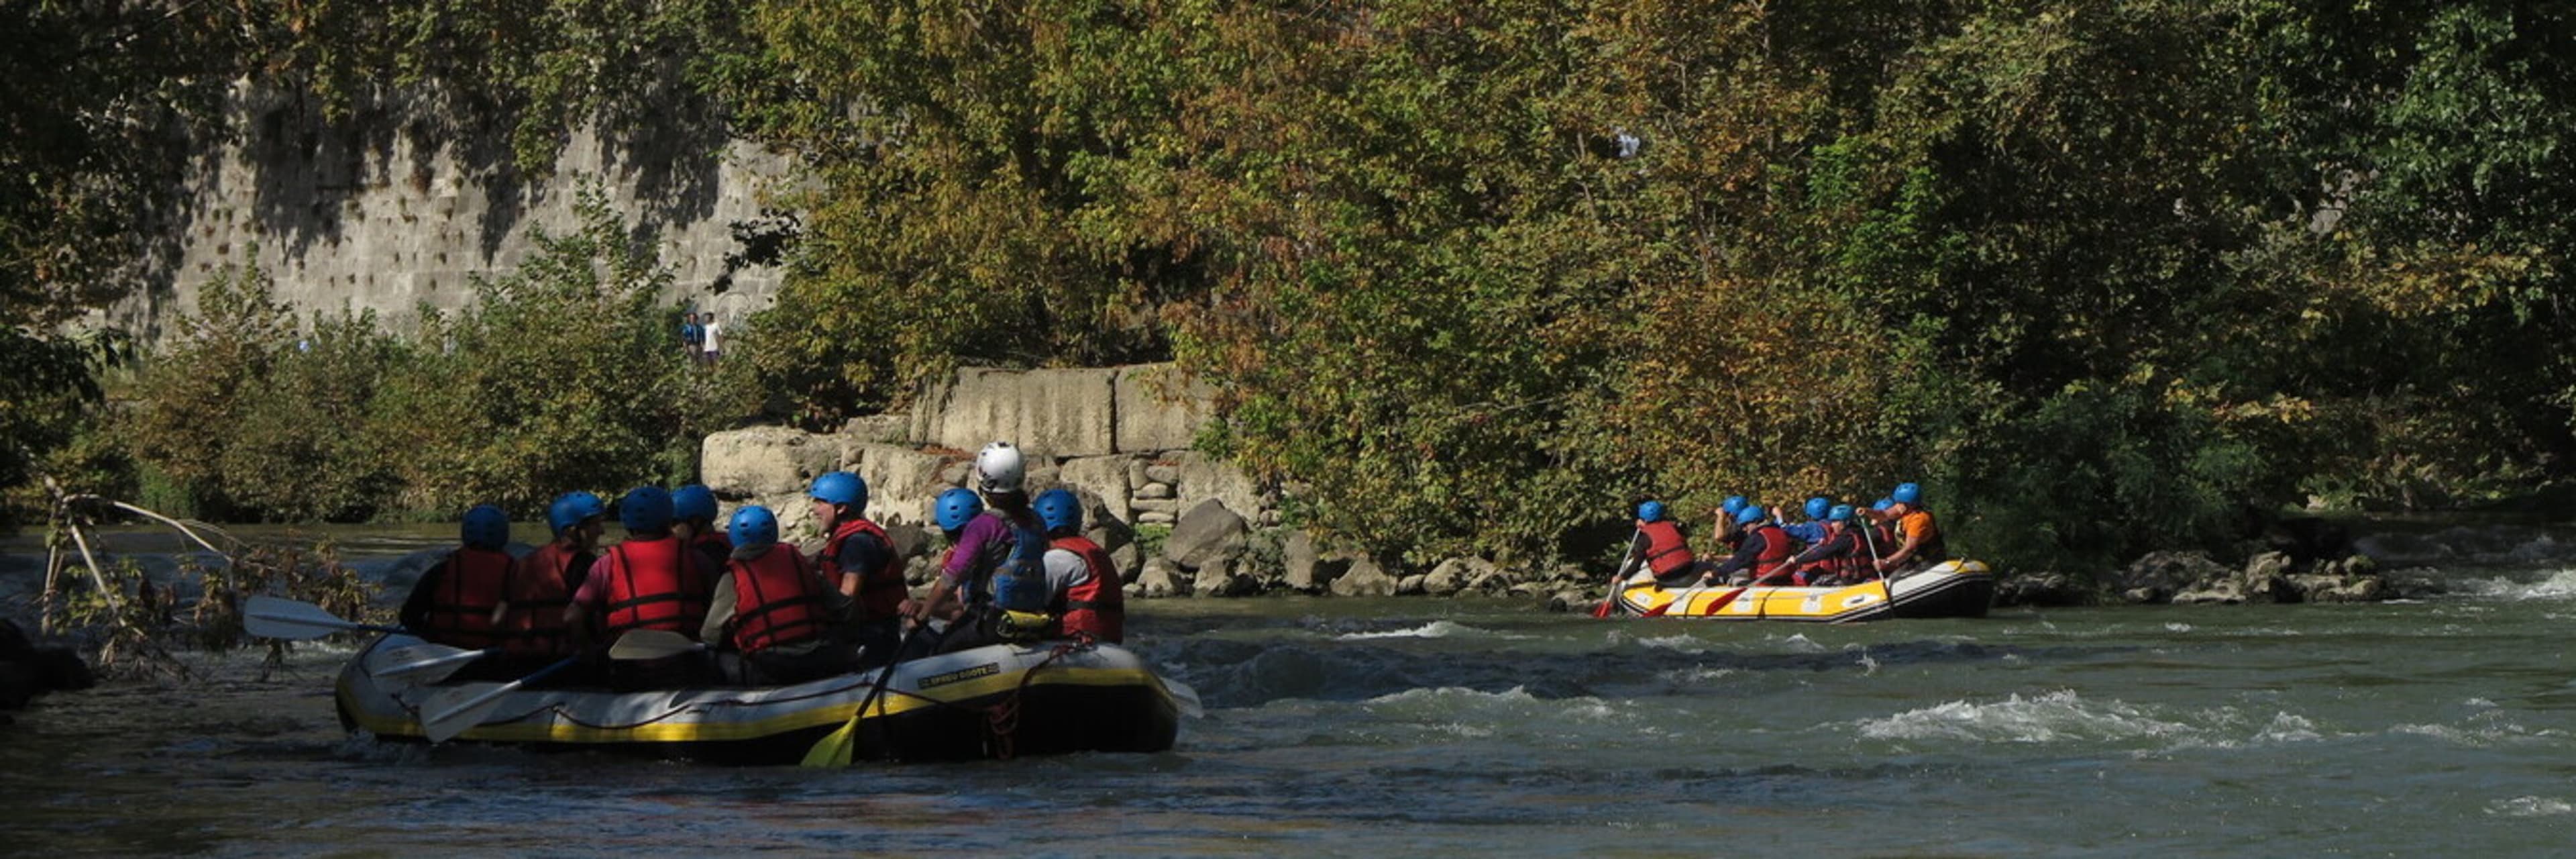 Rafting Tiber